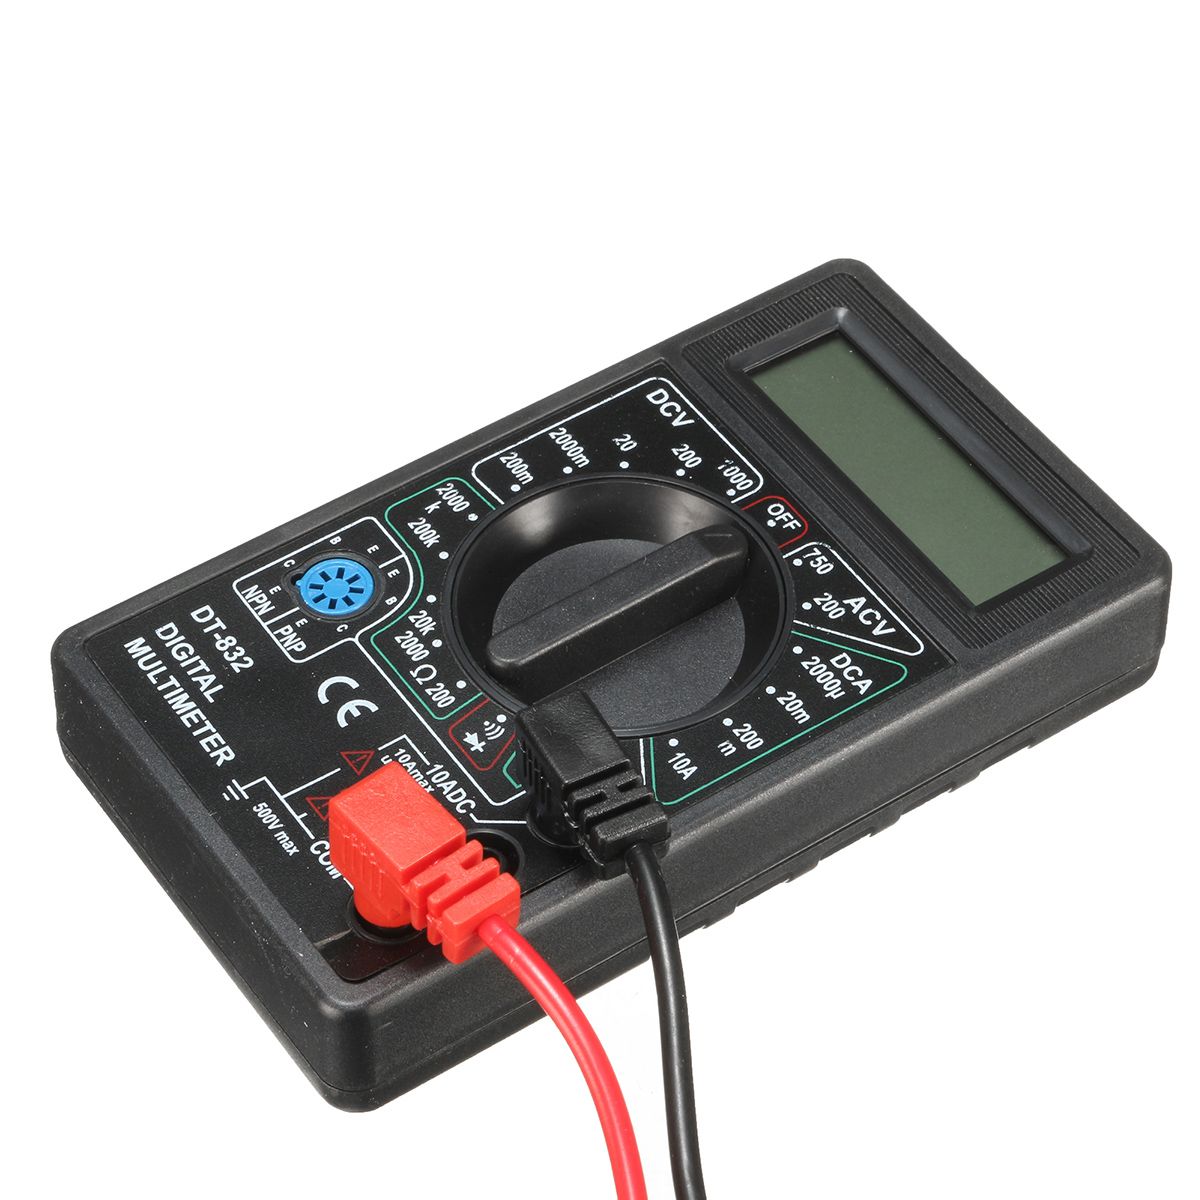 DANIU-DT832-Digital-LCD-Multimeter-Ohm-Voltage-Ampere-Meter-Buzzer-Function-with-Test-Probe-1119906